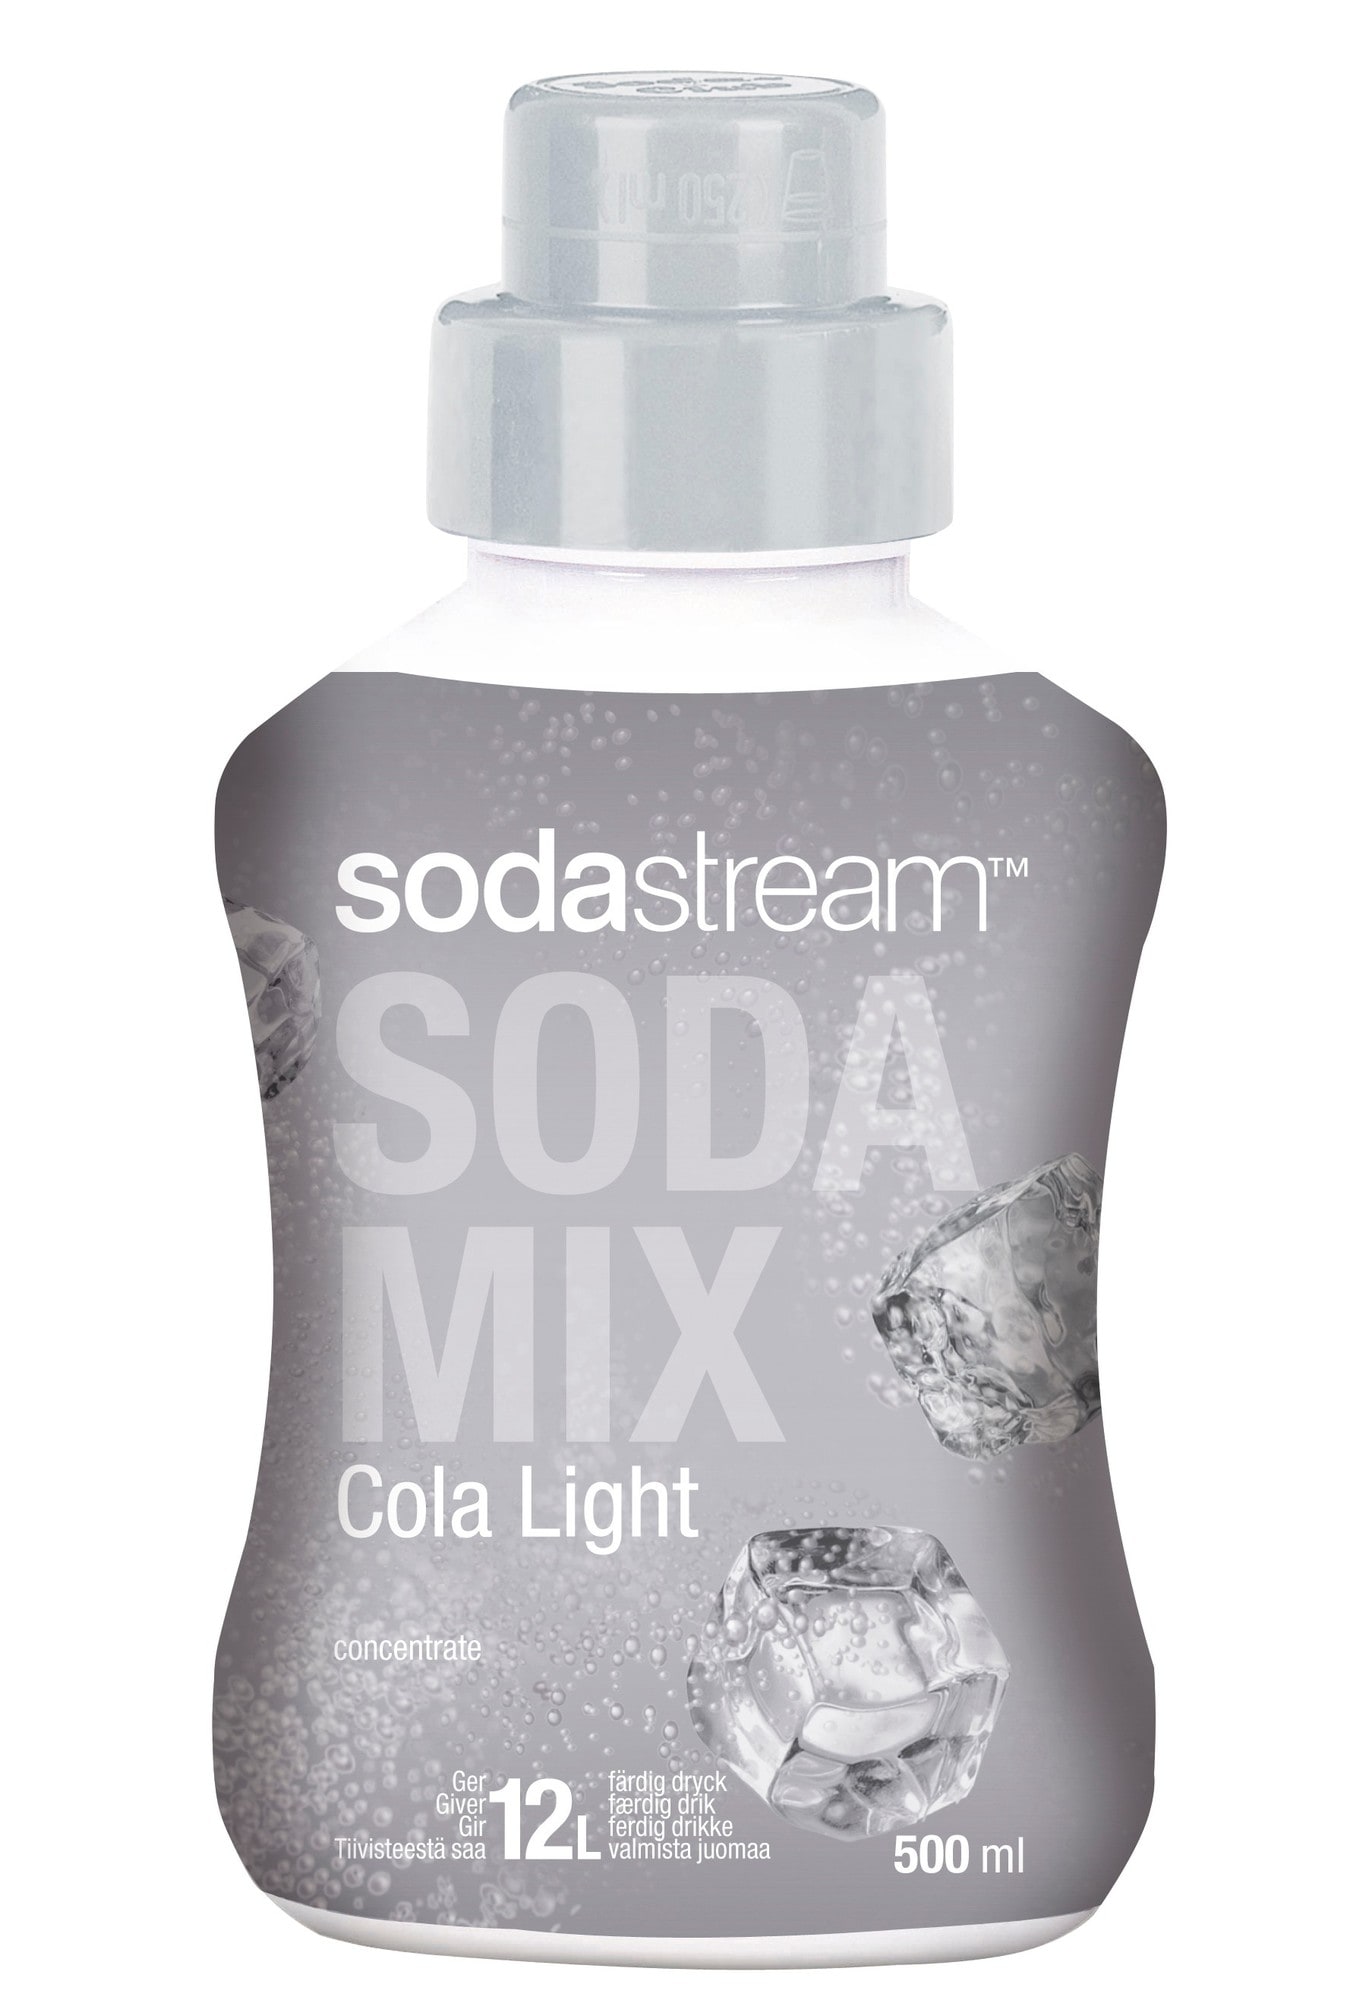 SodaStream Soda Mix smag Cola Light - Sodavandsmaskiner - Elgiganten